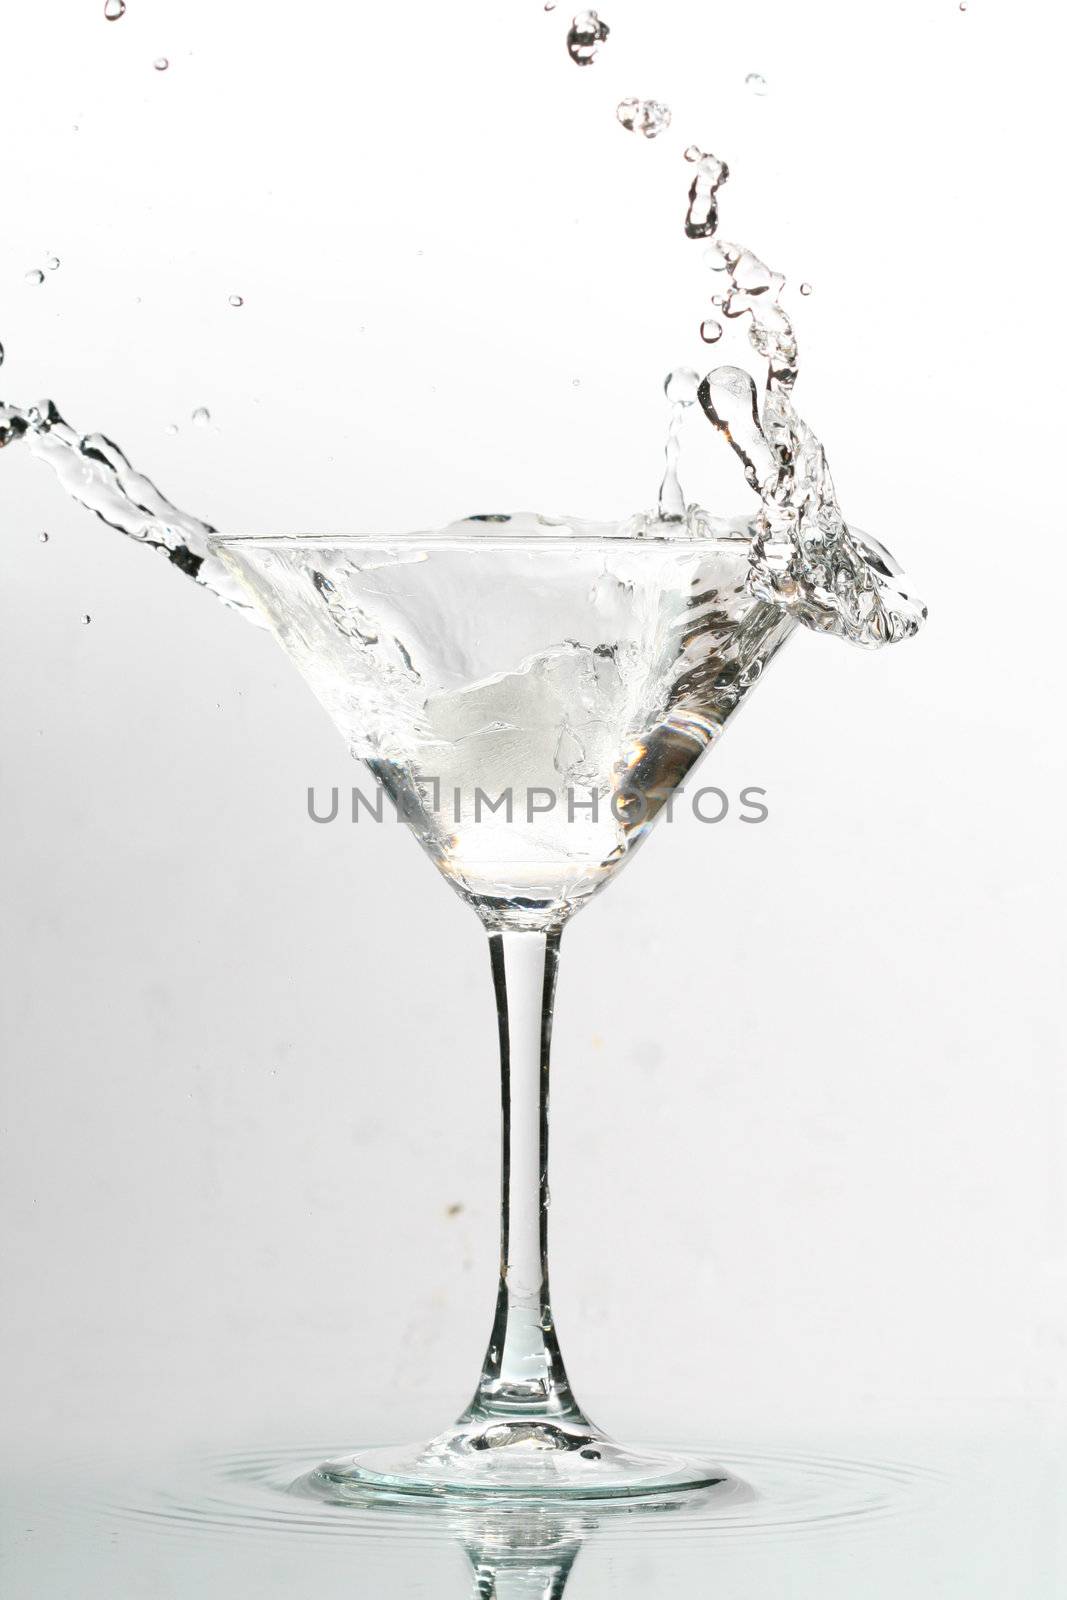 coctail splash on white background close up